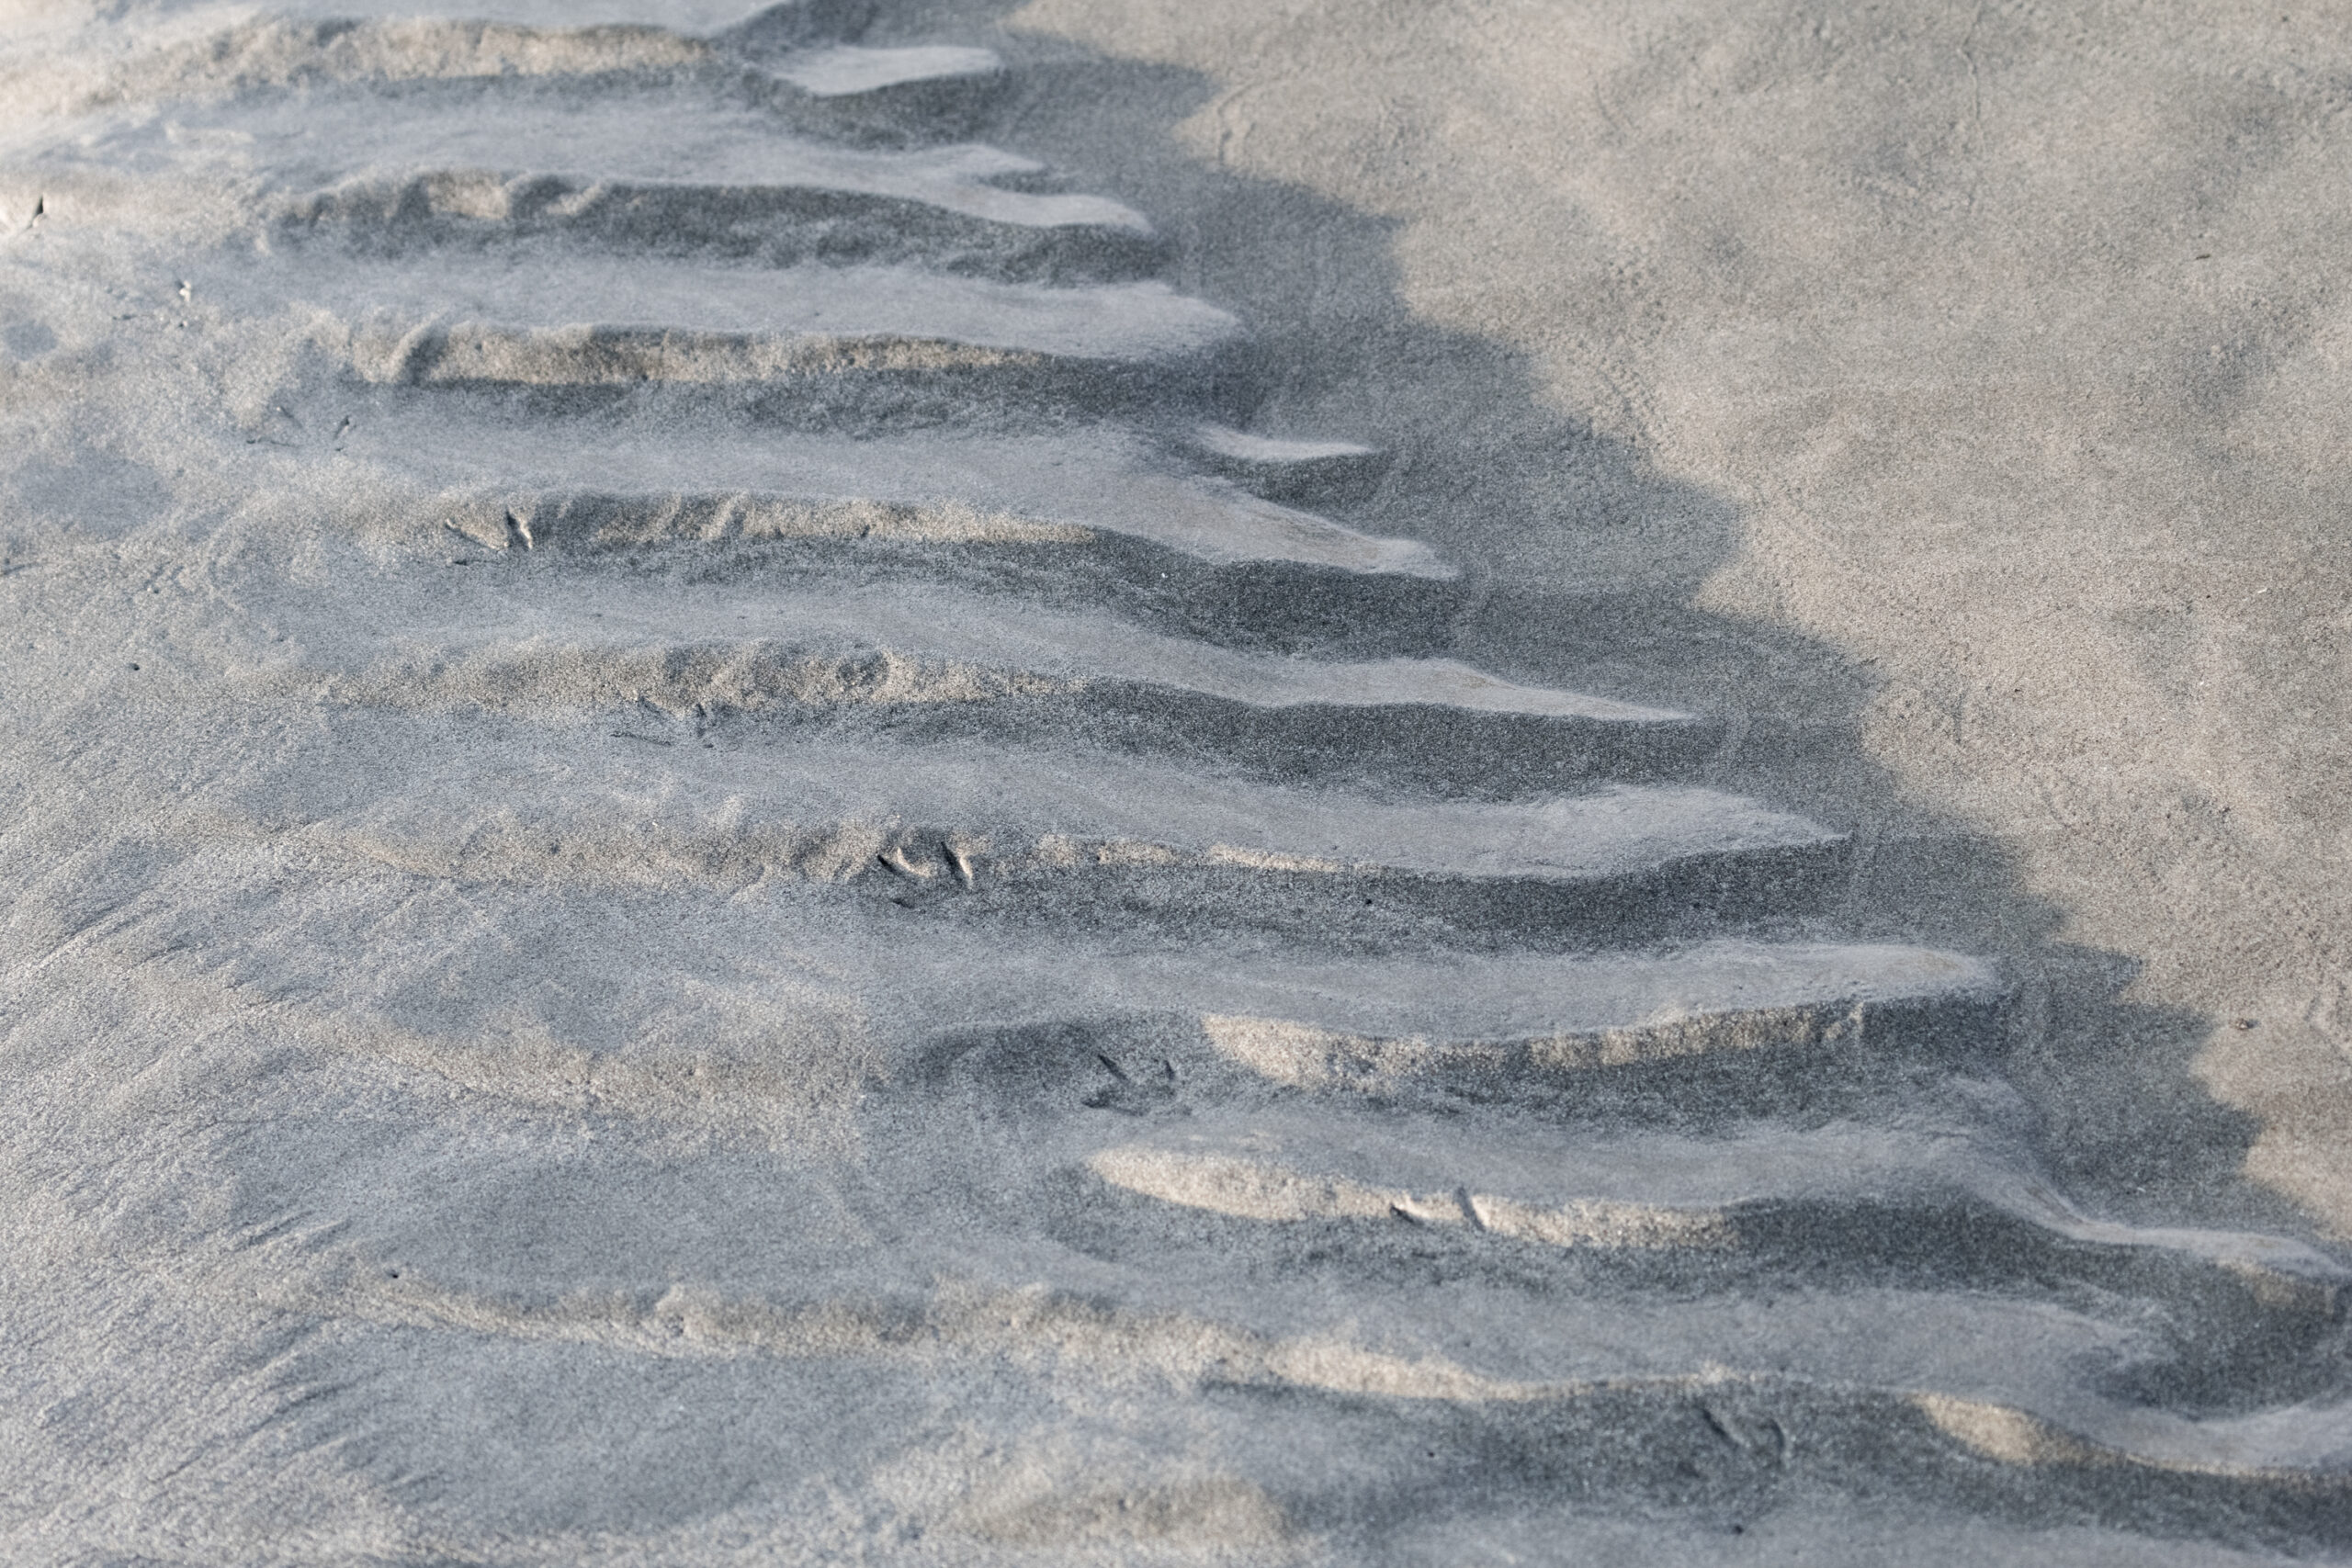 Abstract beach photography focusing on the textures of sand, by Leonardo Ureña.